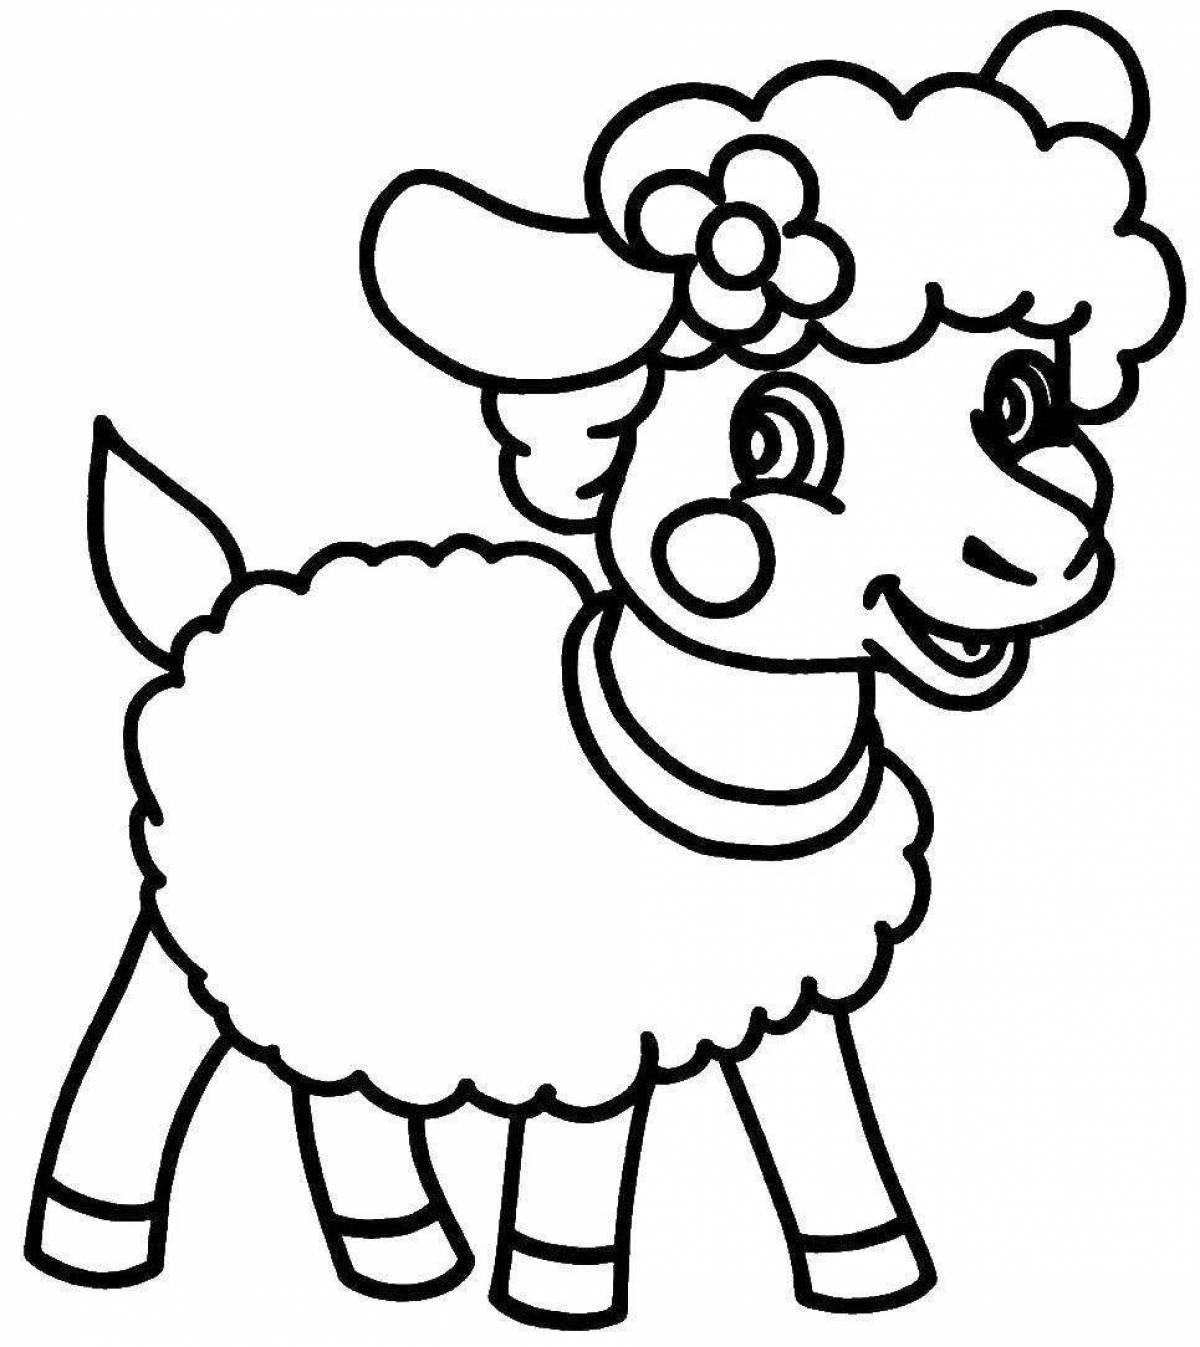 Joyful lamb coloring book for children 3-4 years old